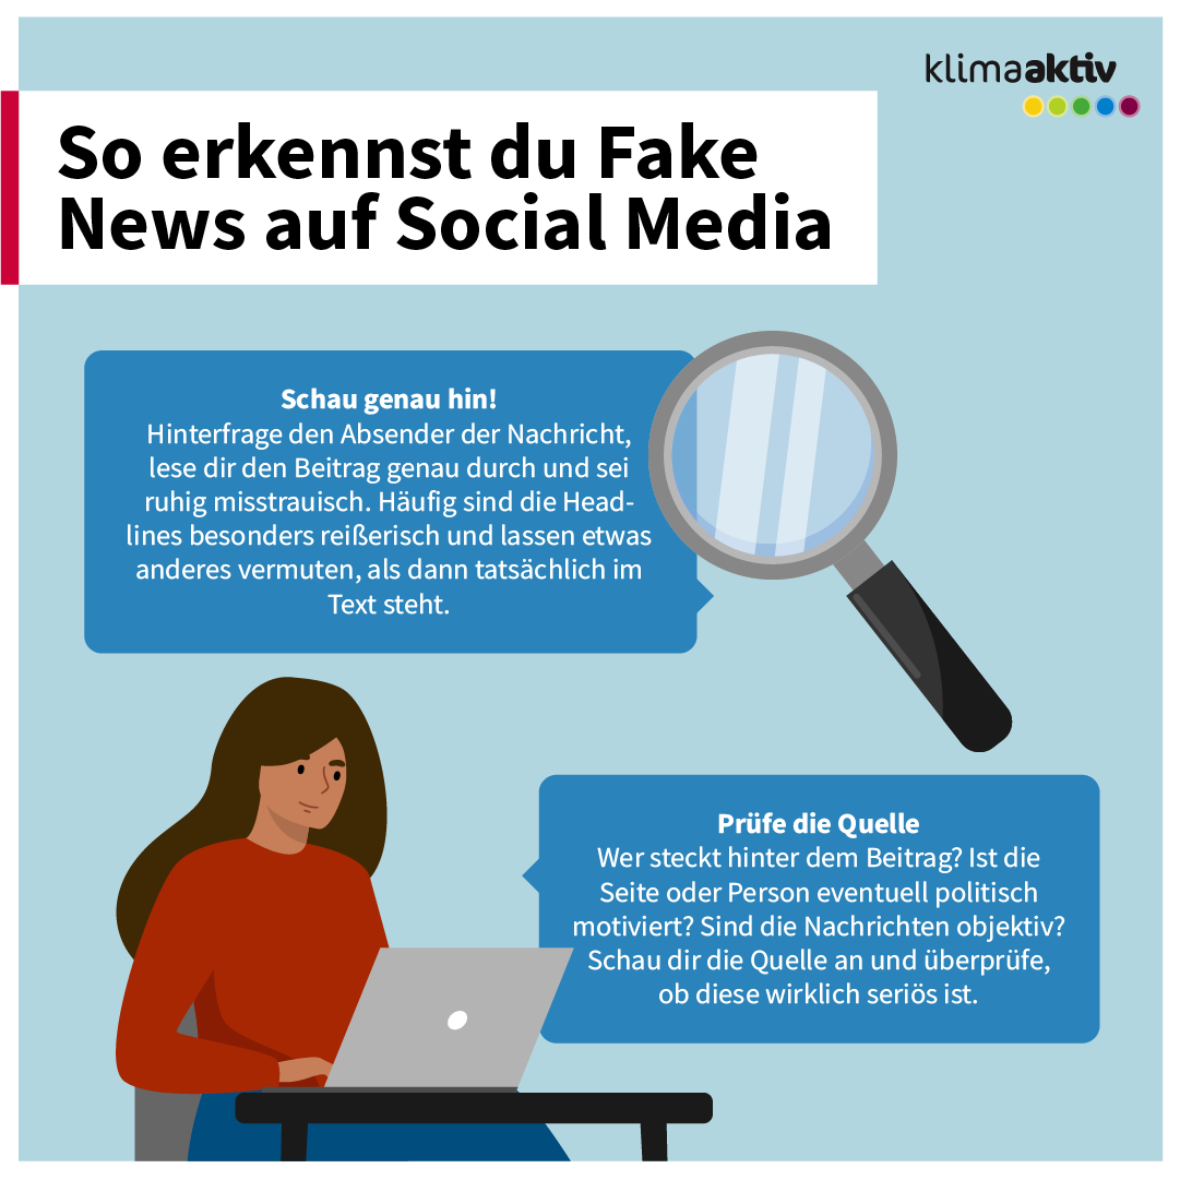 So erkennst du Fake News auf Social Media